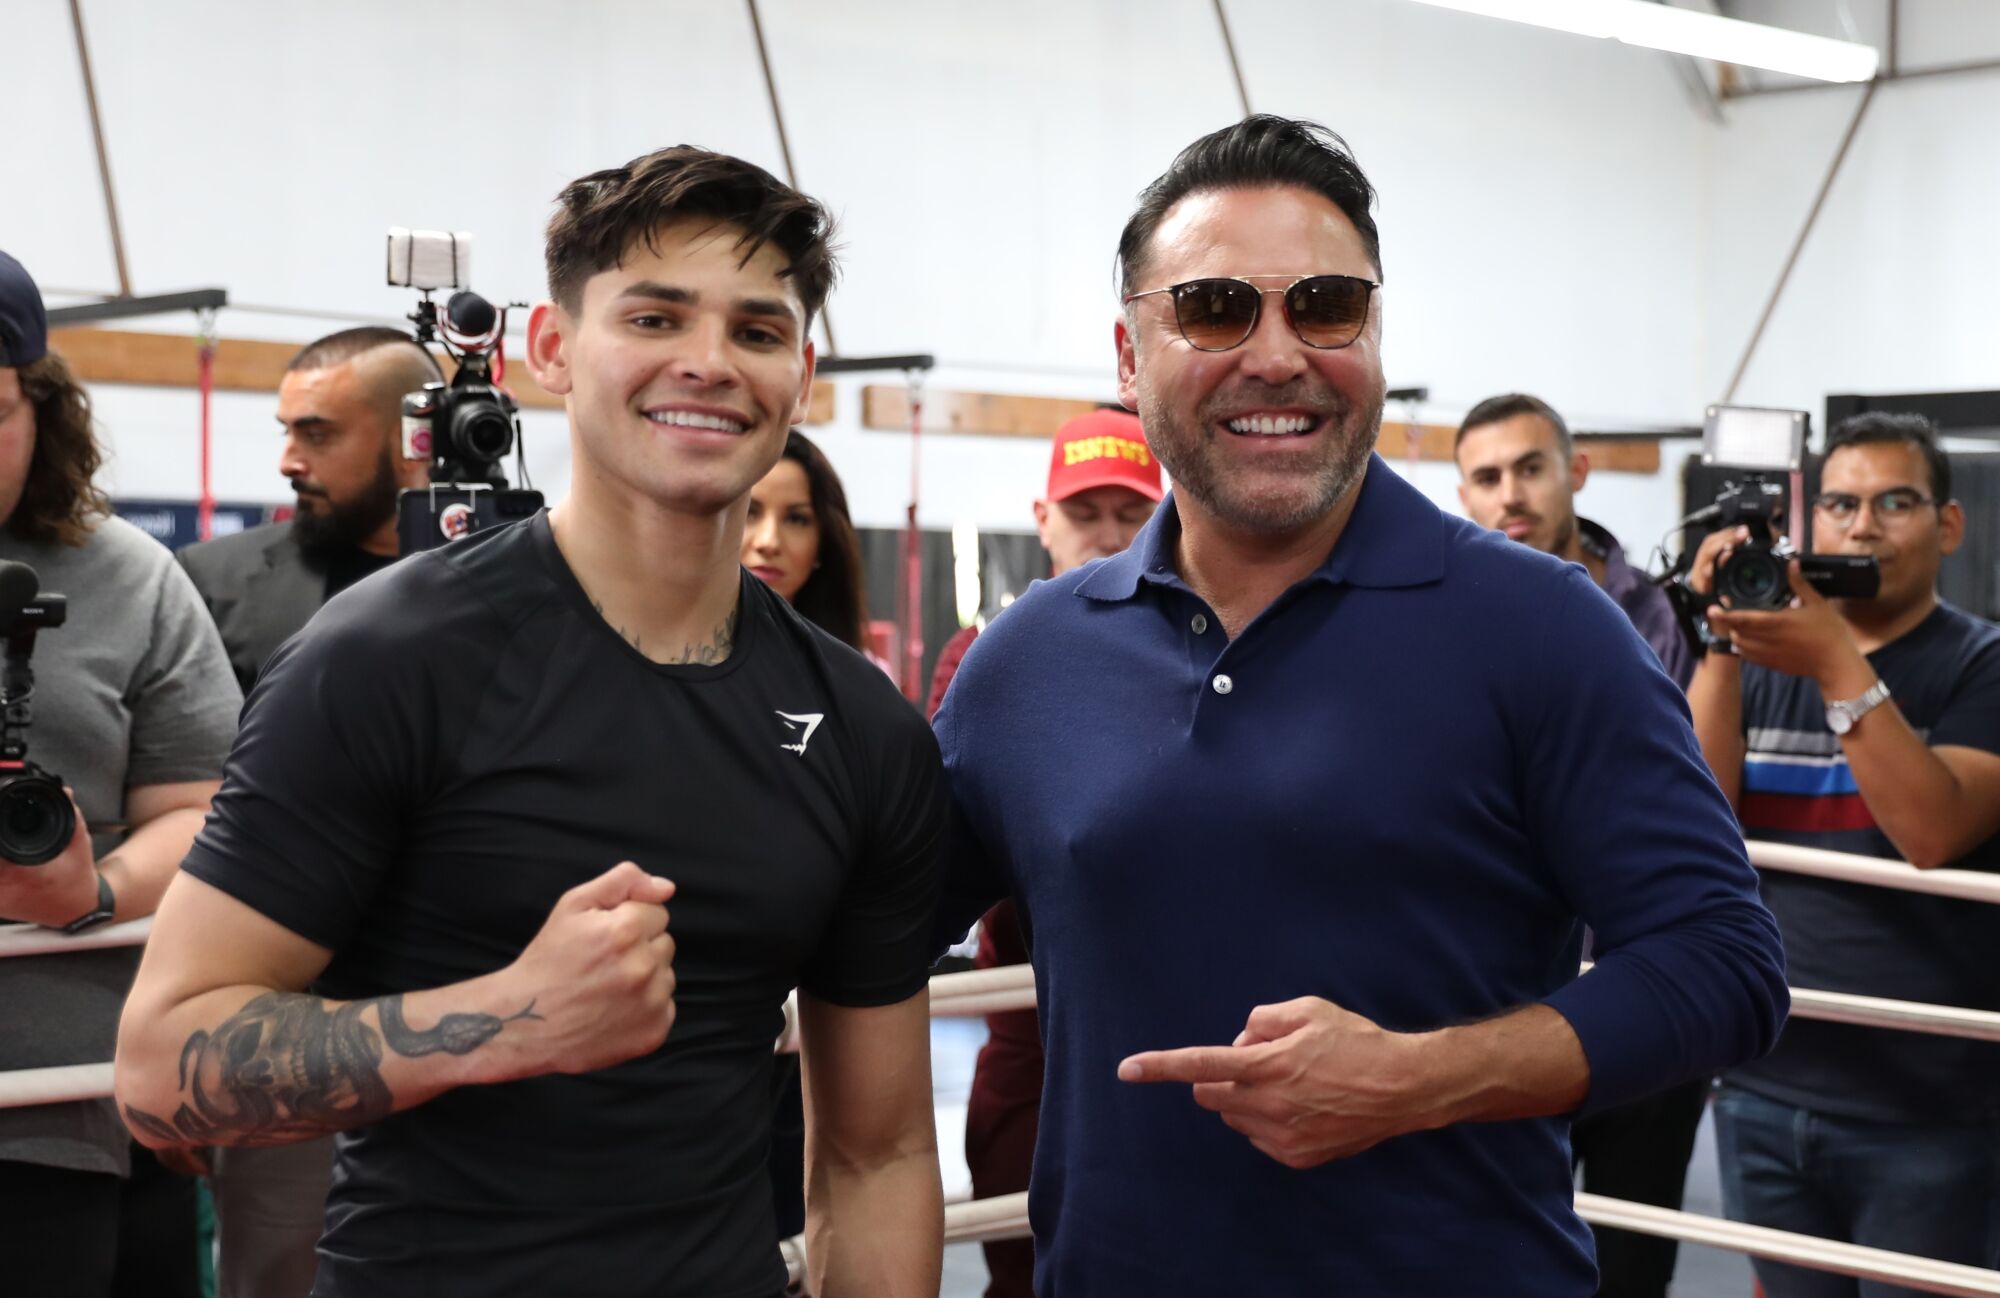 Ryan Garcia, left, poses for photos with former boxer and promoter Oscar de la Hoya